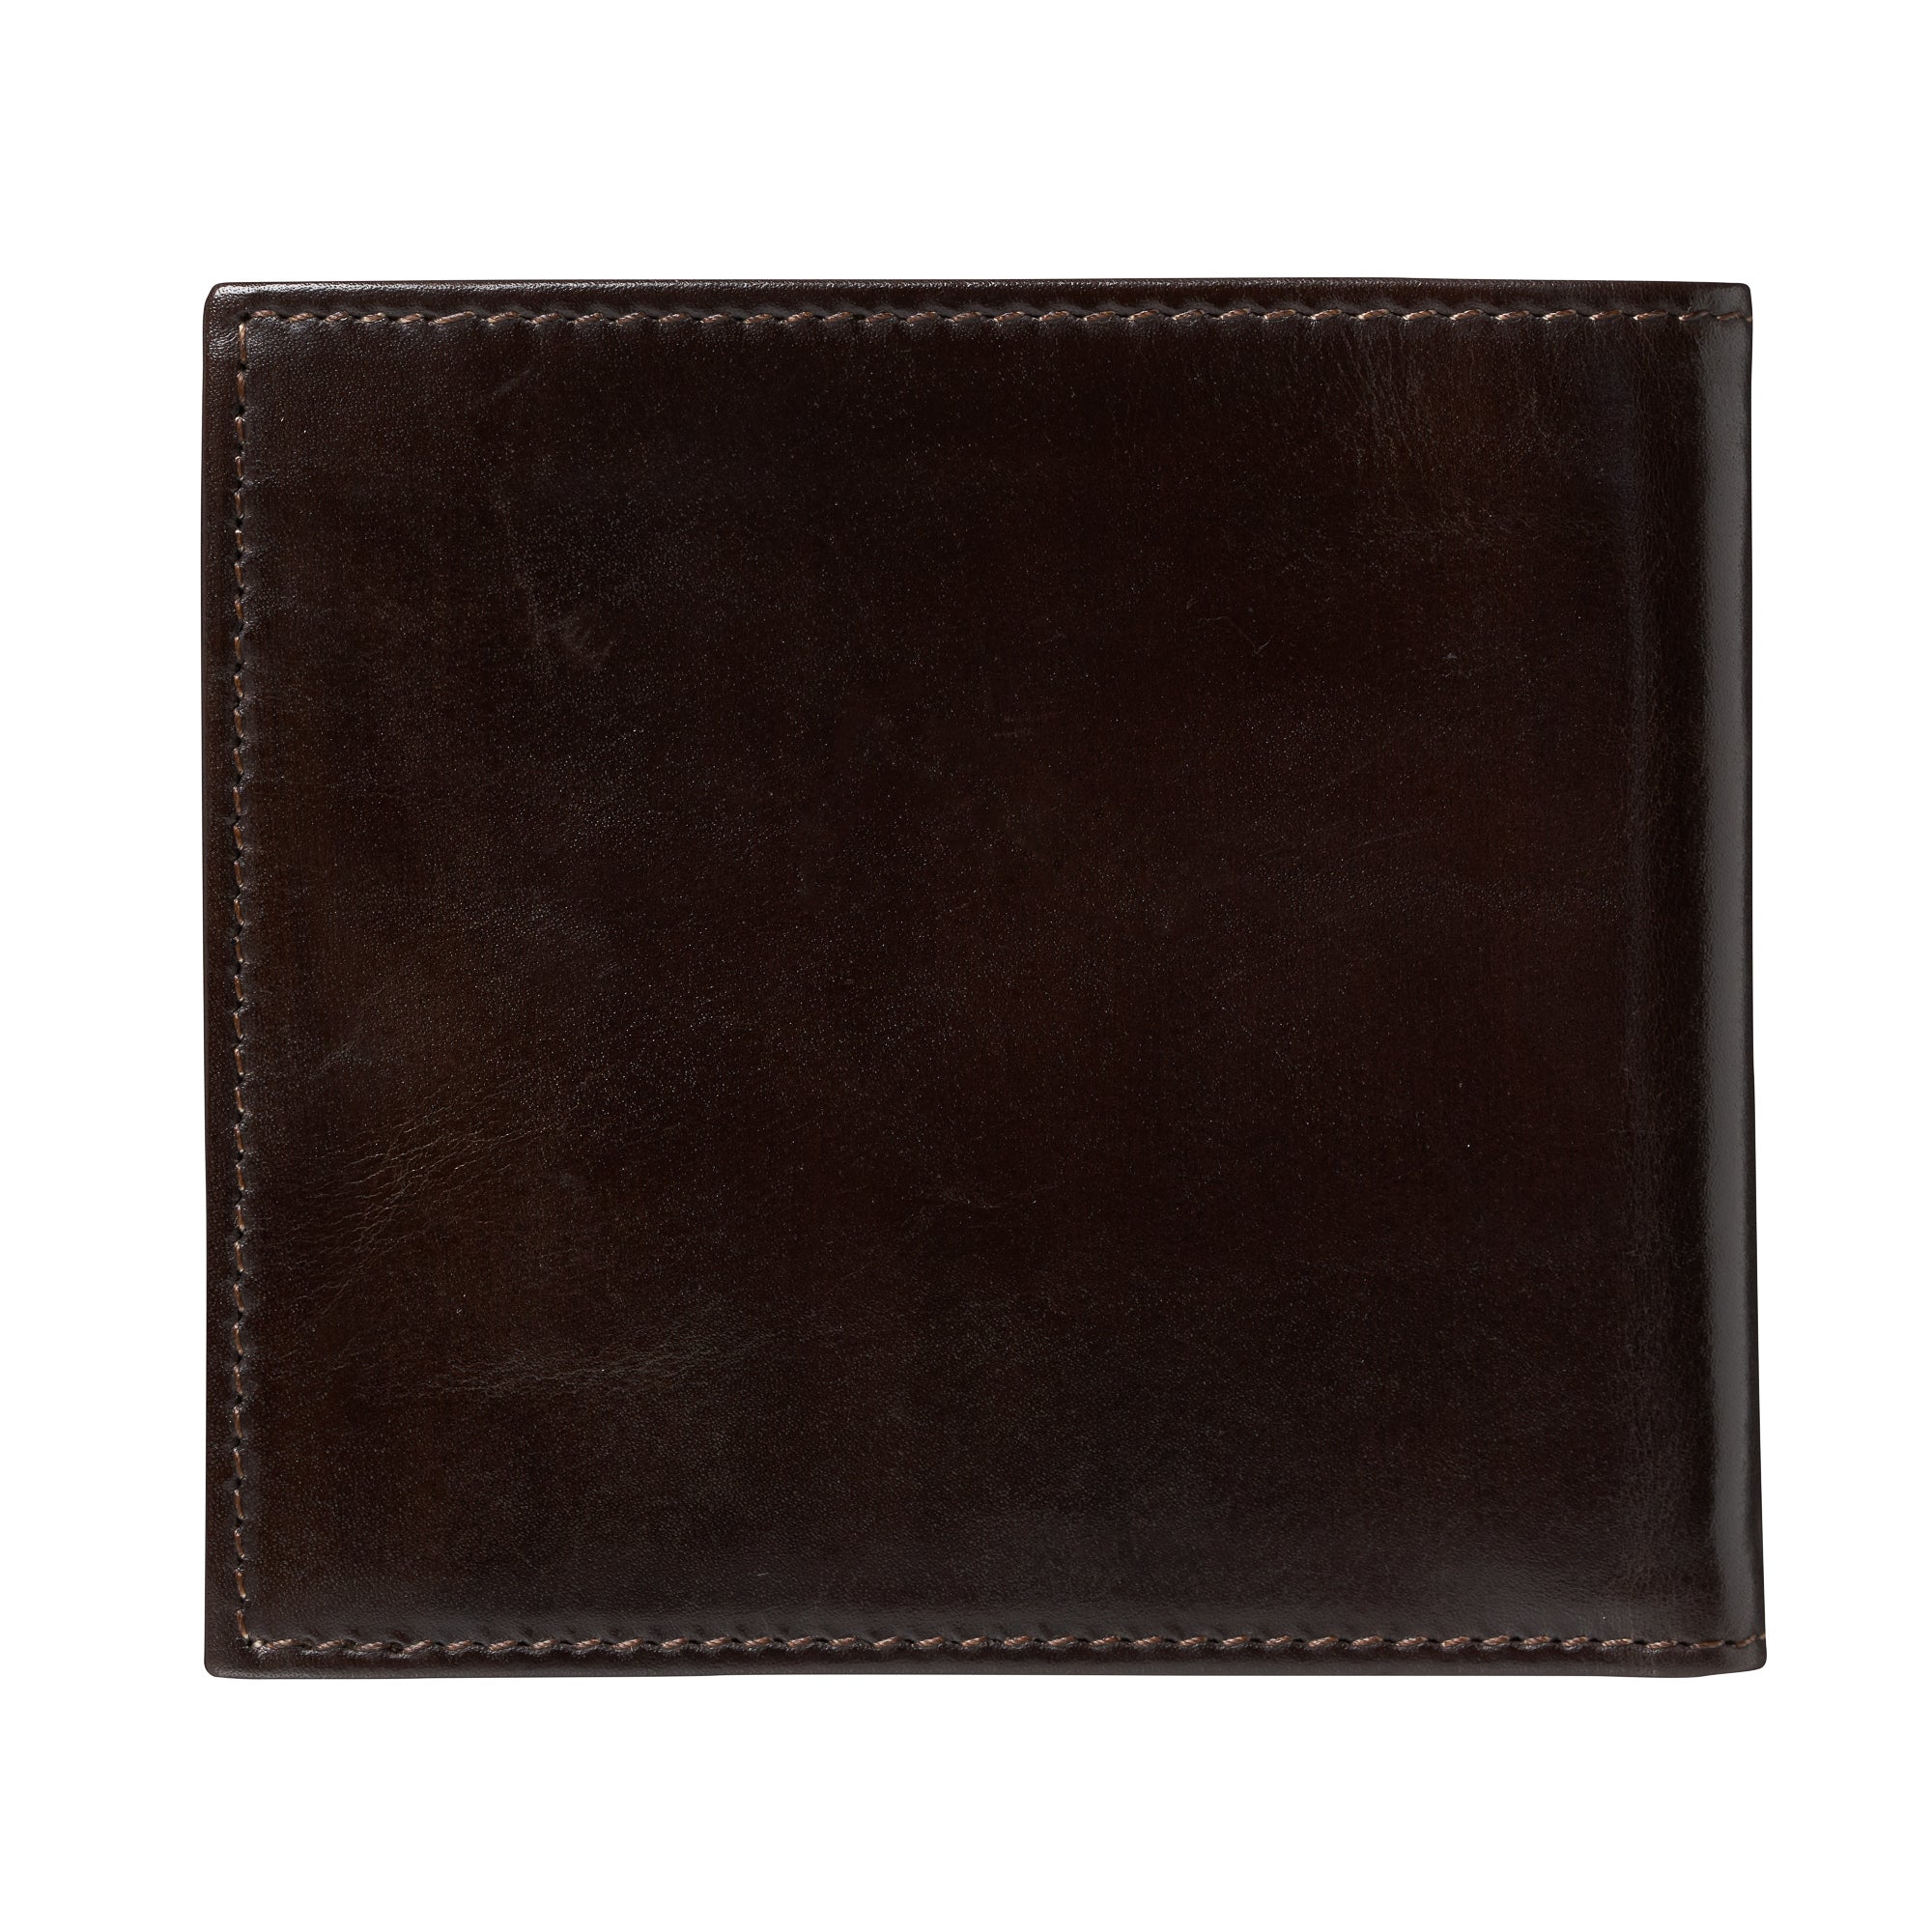 Italian Leather Wallet - Chocolate